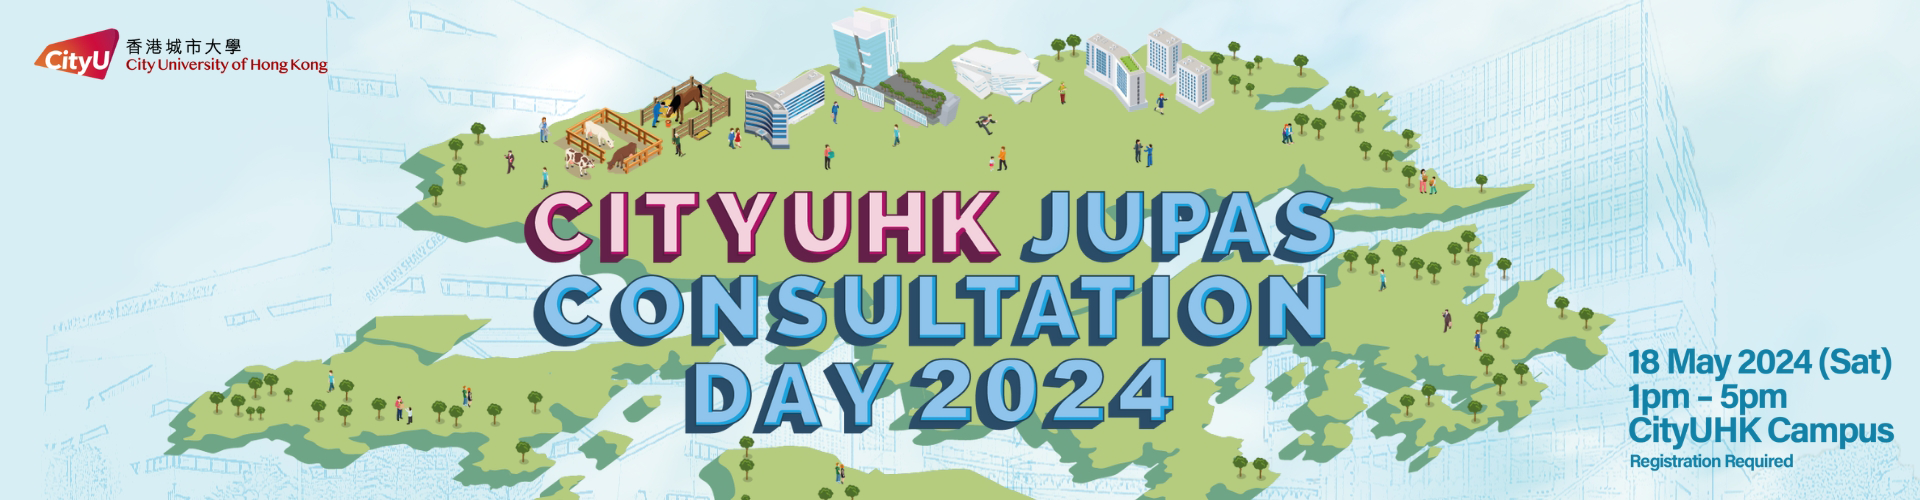 CITYUHK JUPAS CONSULTATION DAY 2024